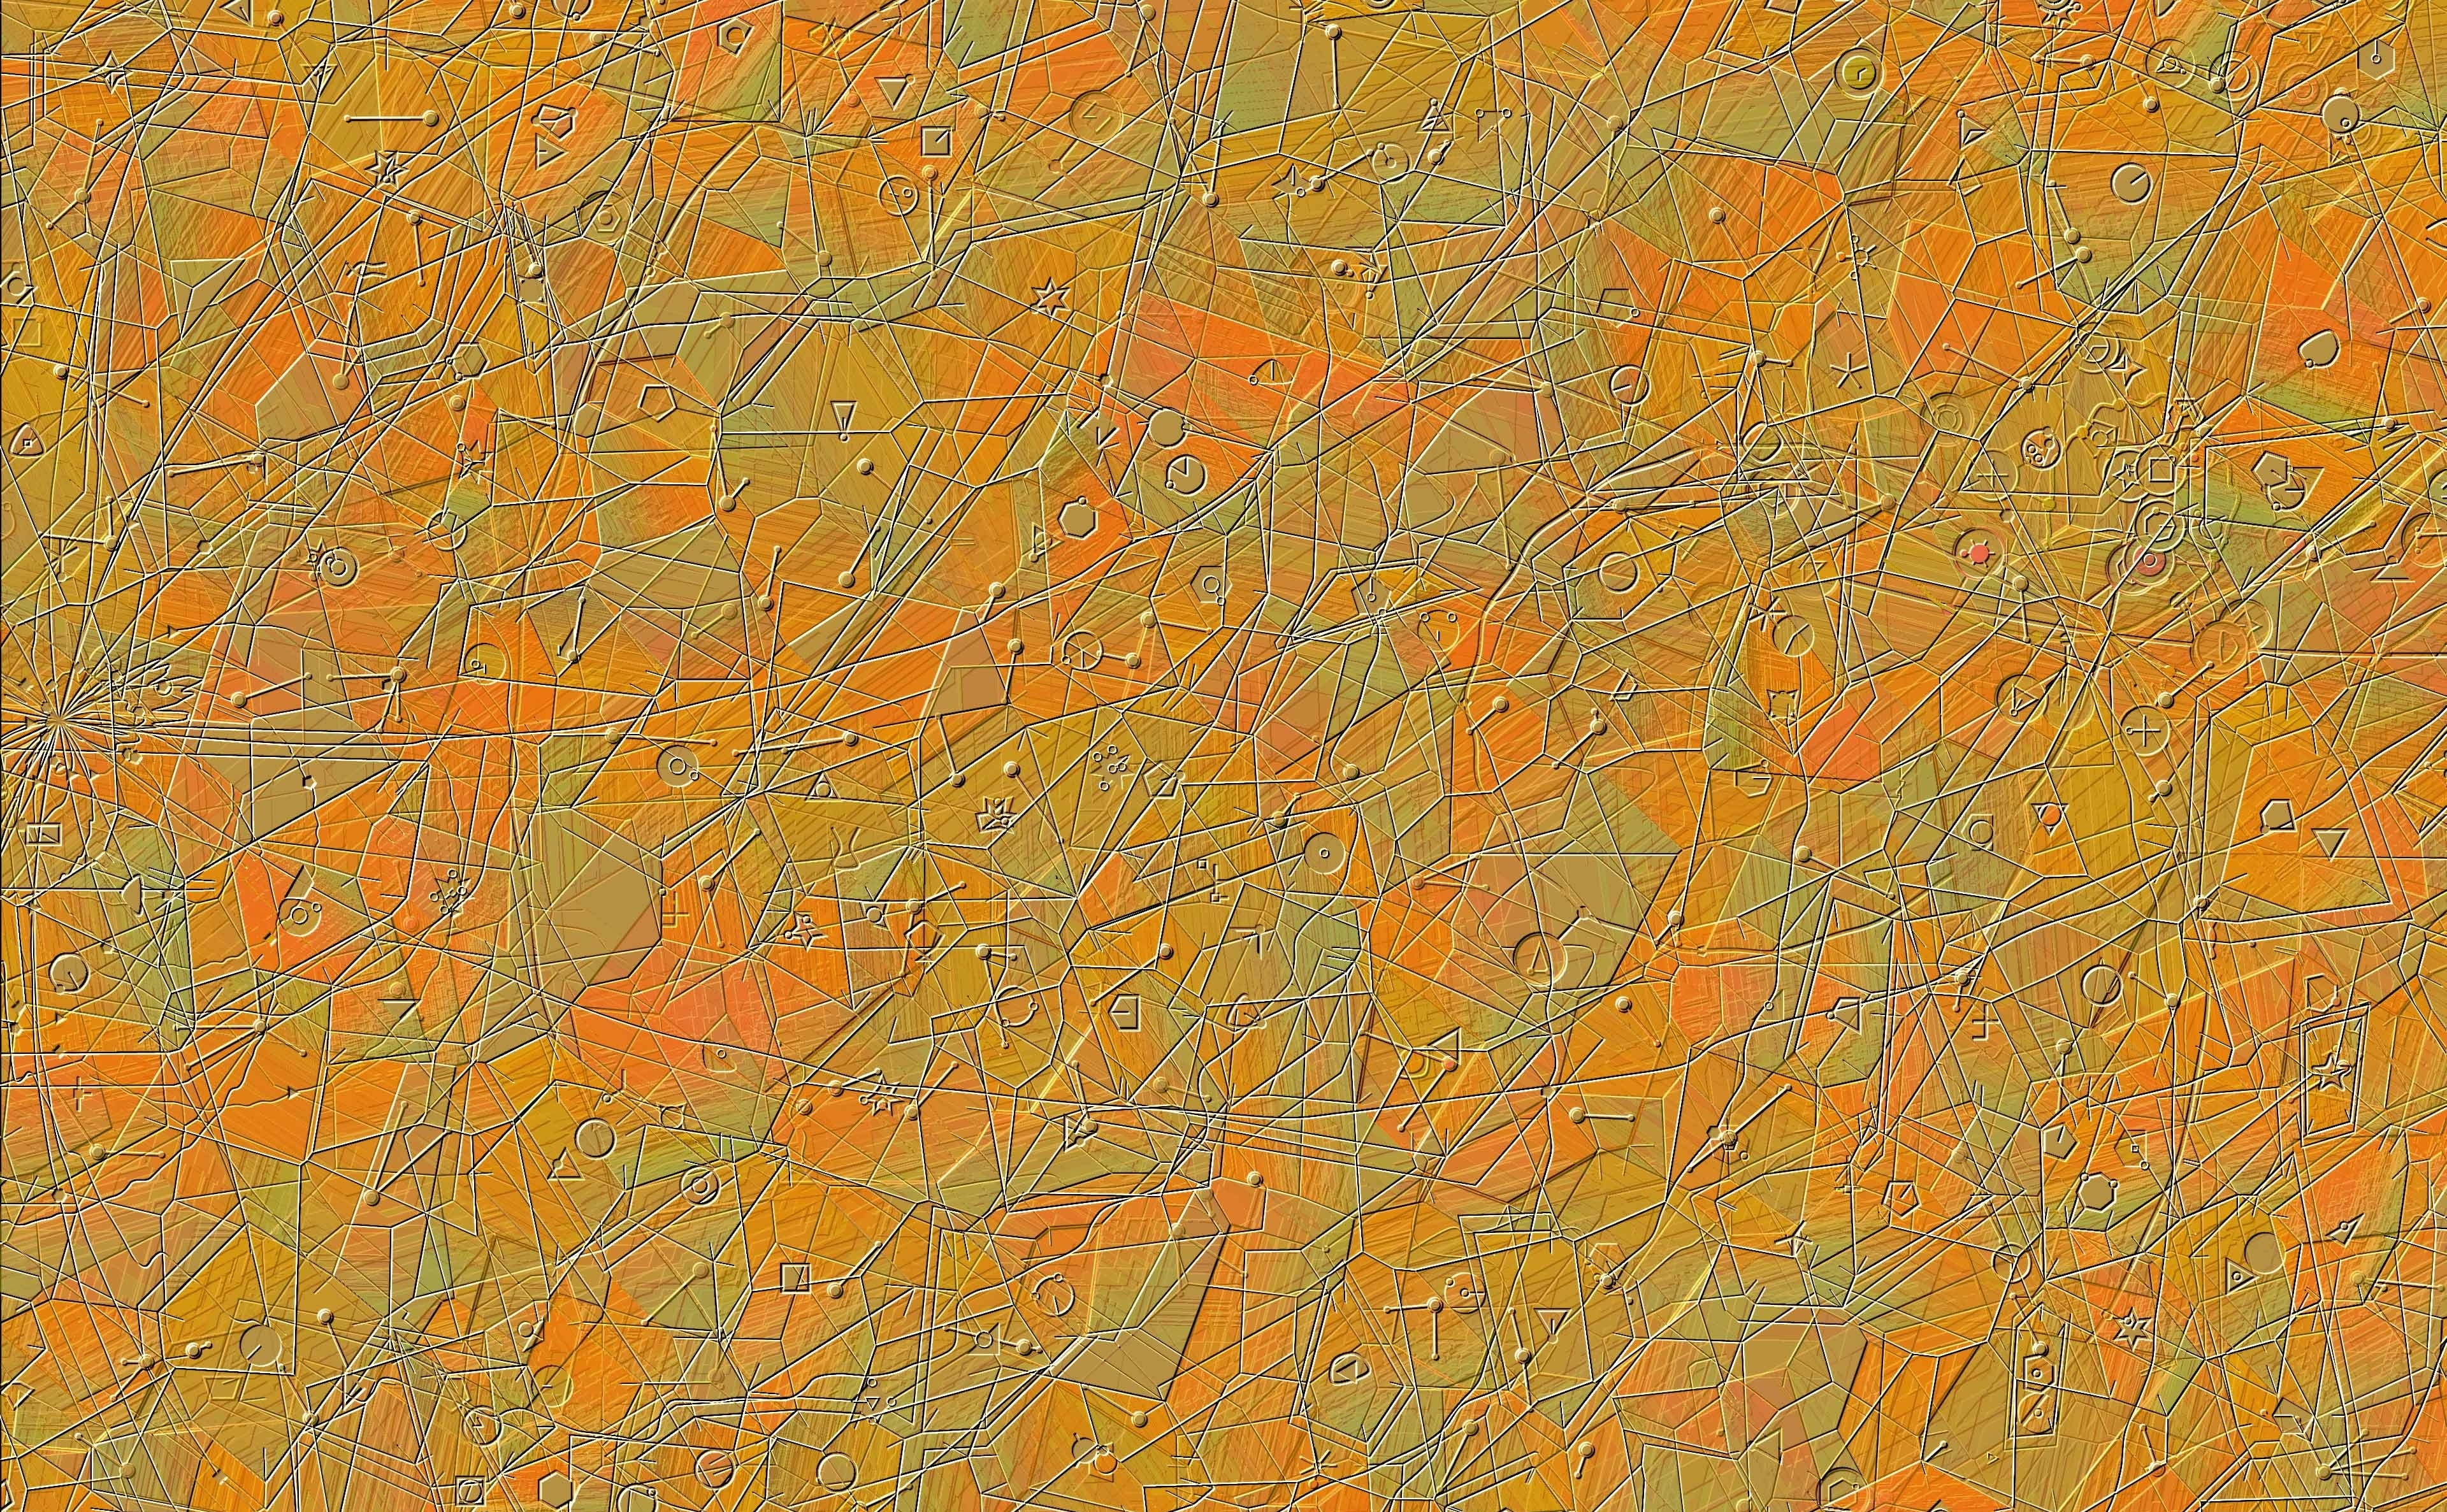 Flannel Autumn, Artistic, Abstract, voronoi, space, scheme, cells